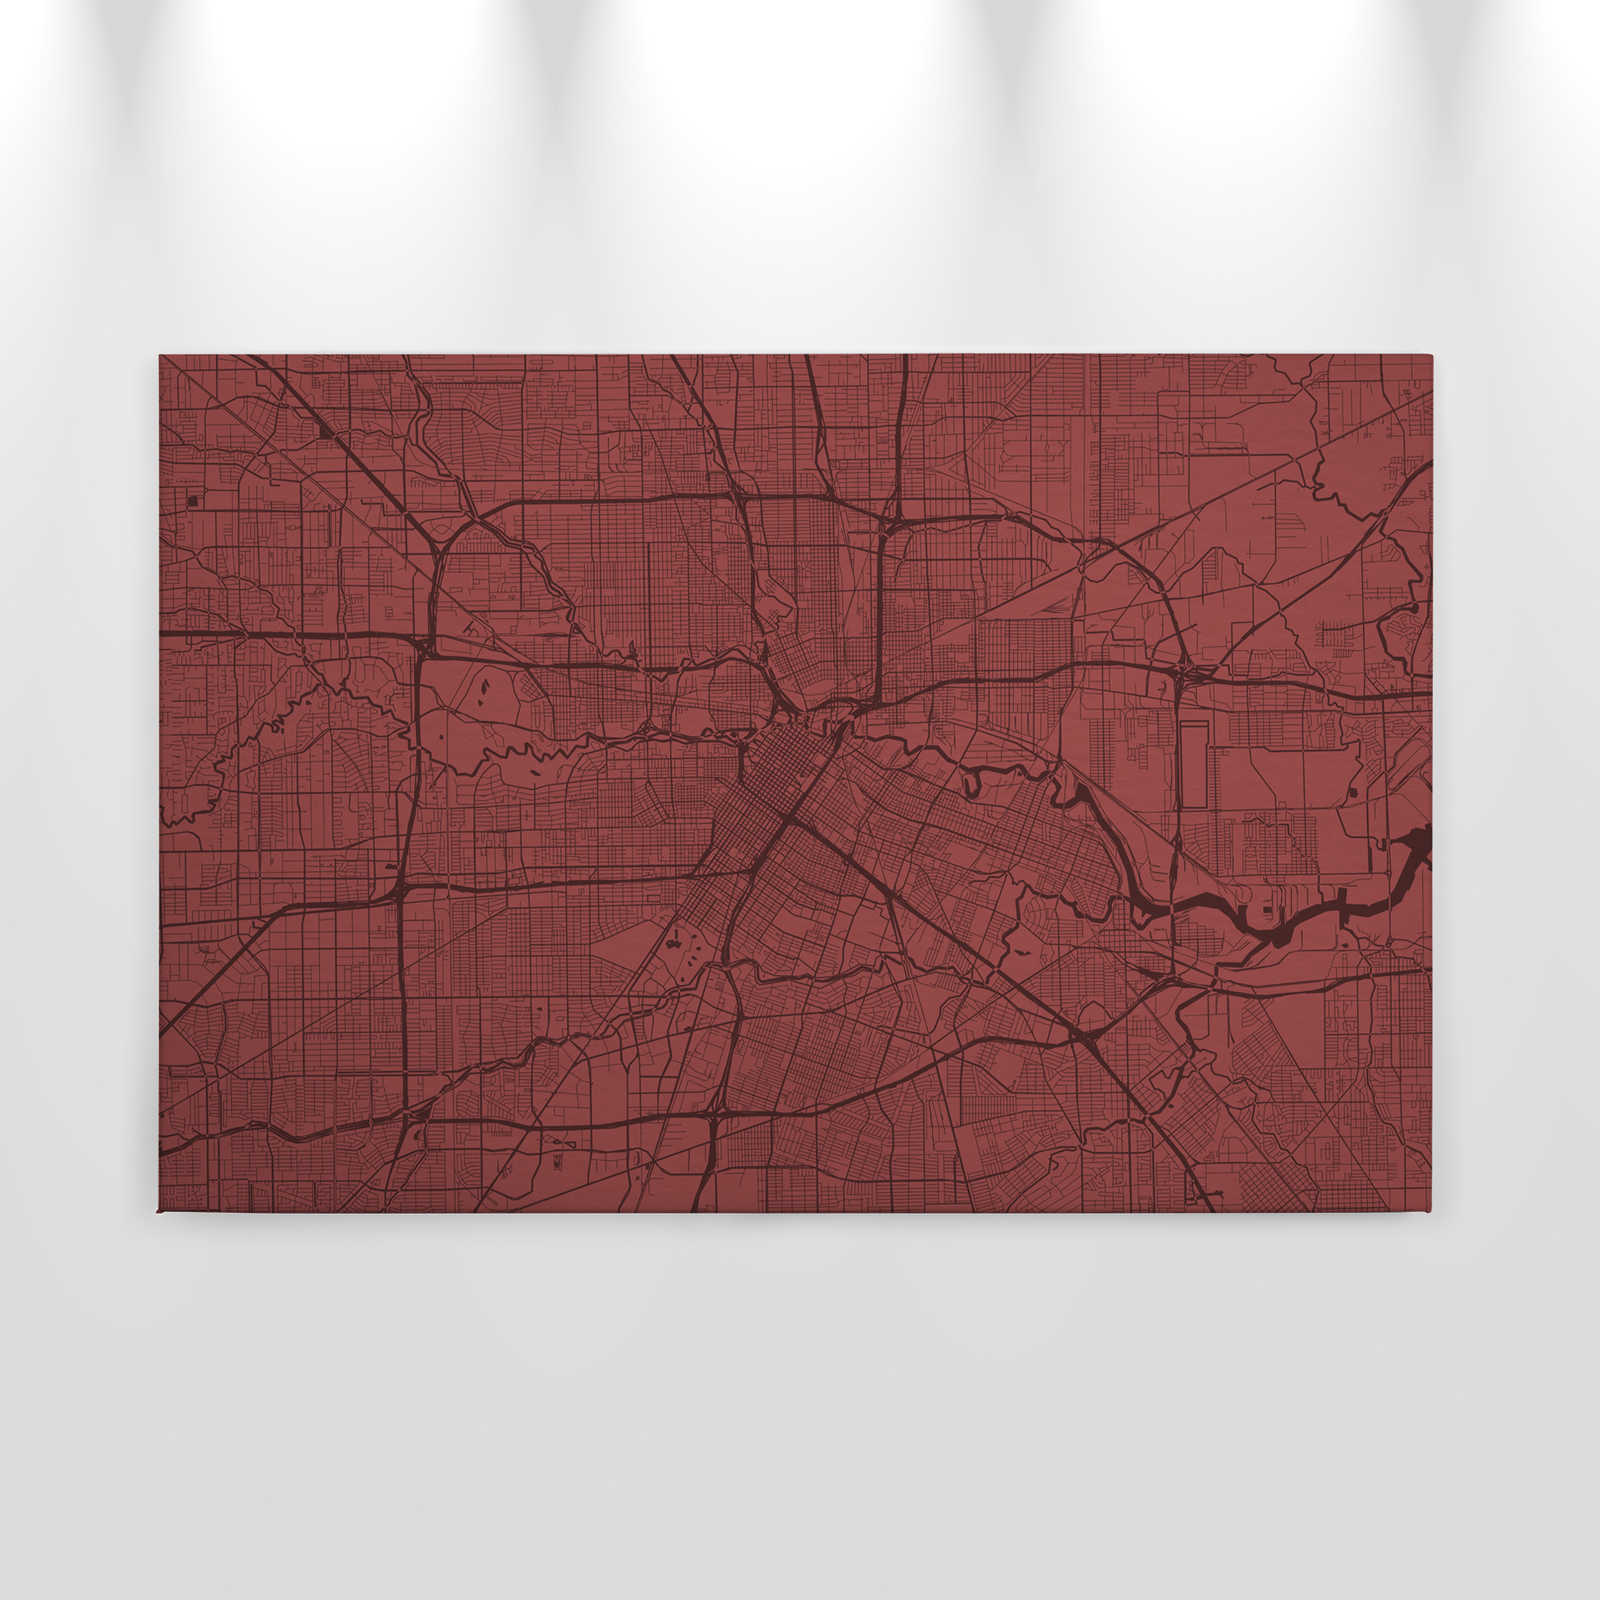             Leinwandbild Stadtkarte mit Straßenverlauf | rot – 0,90 m x 0,60 m
        